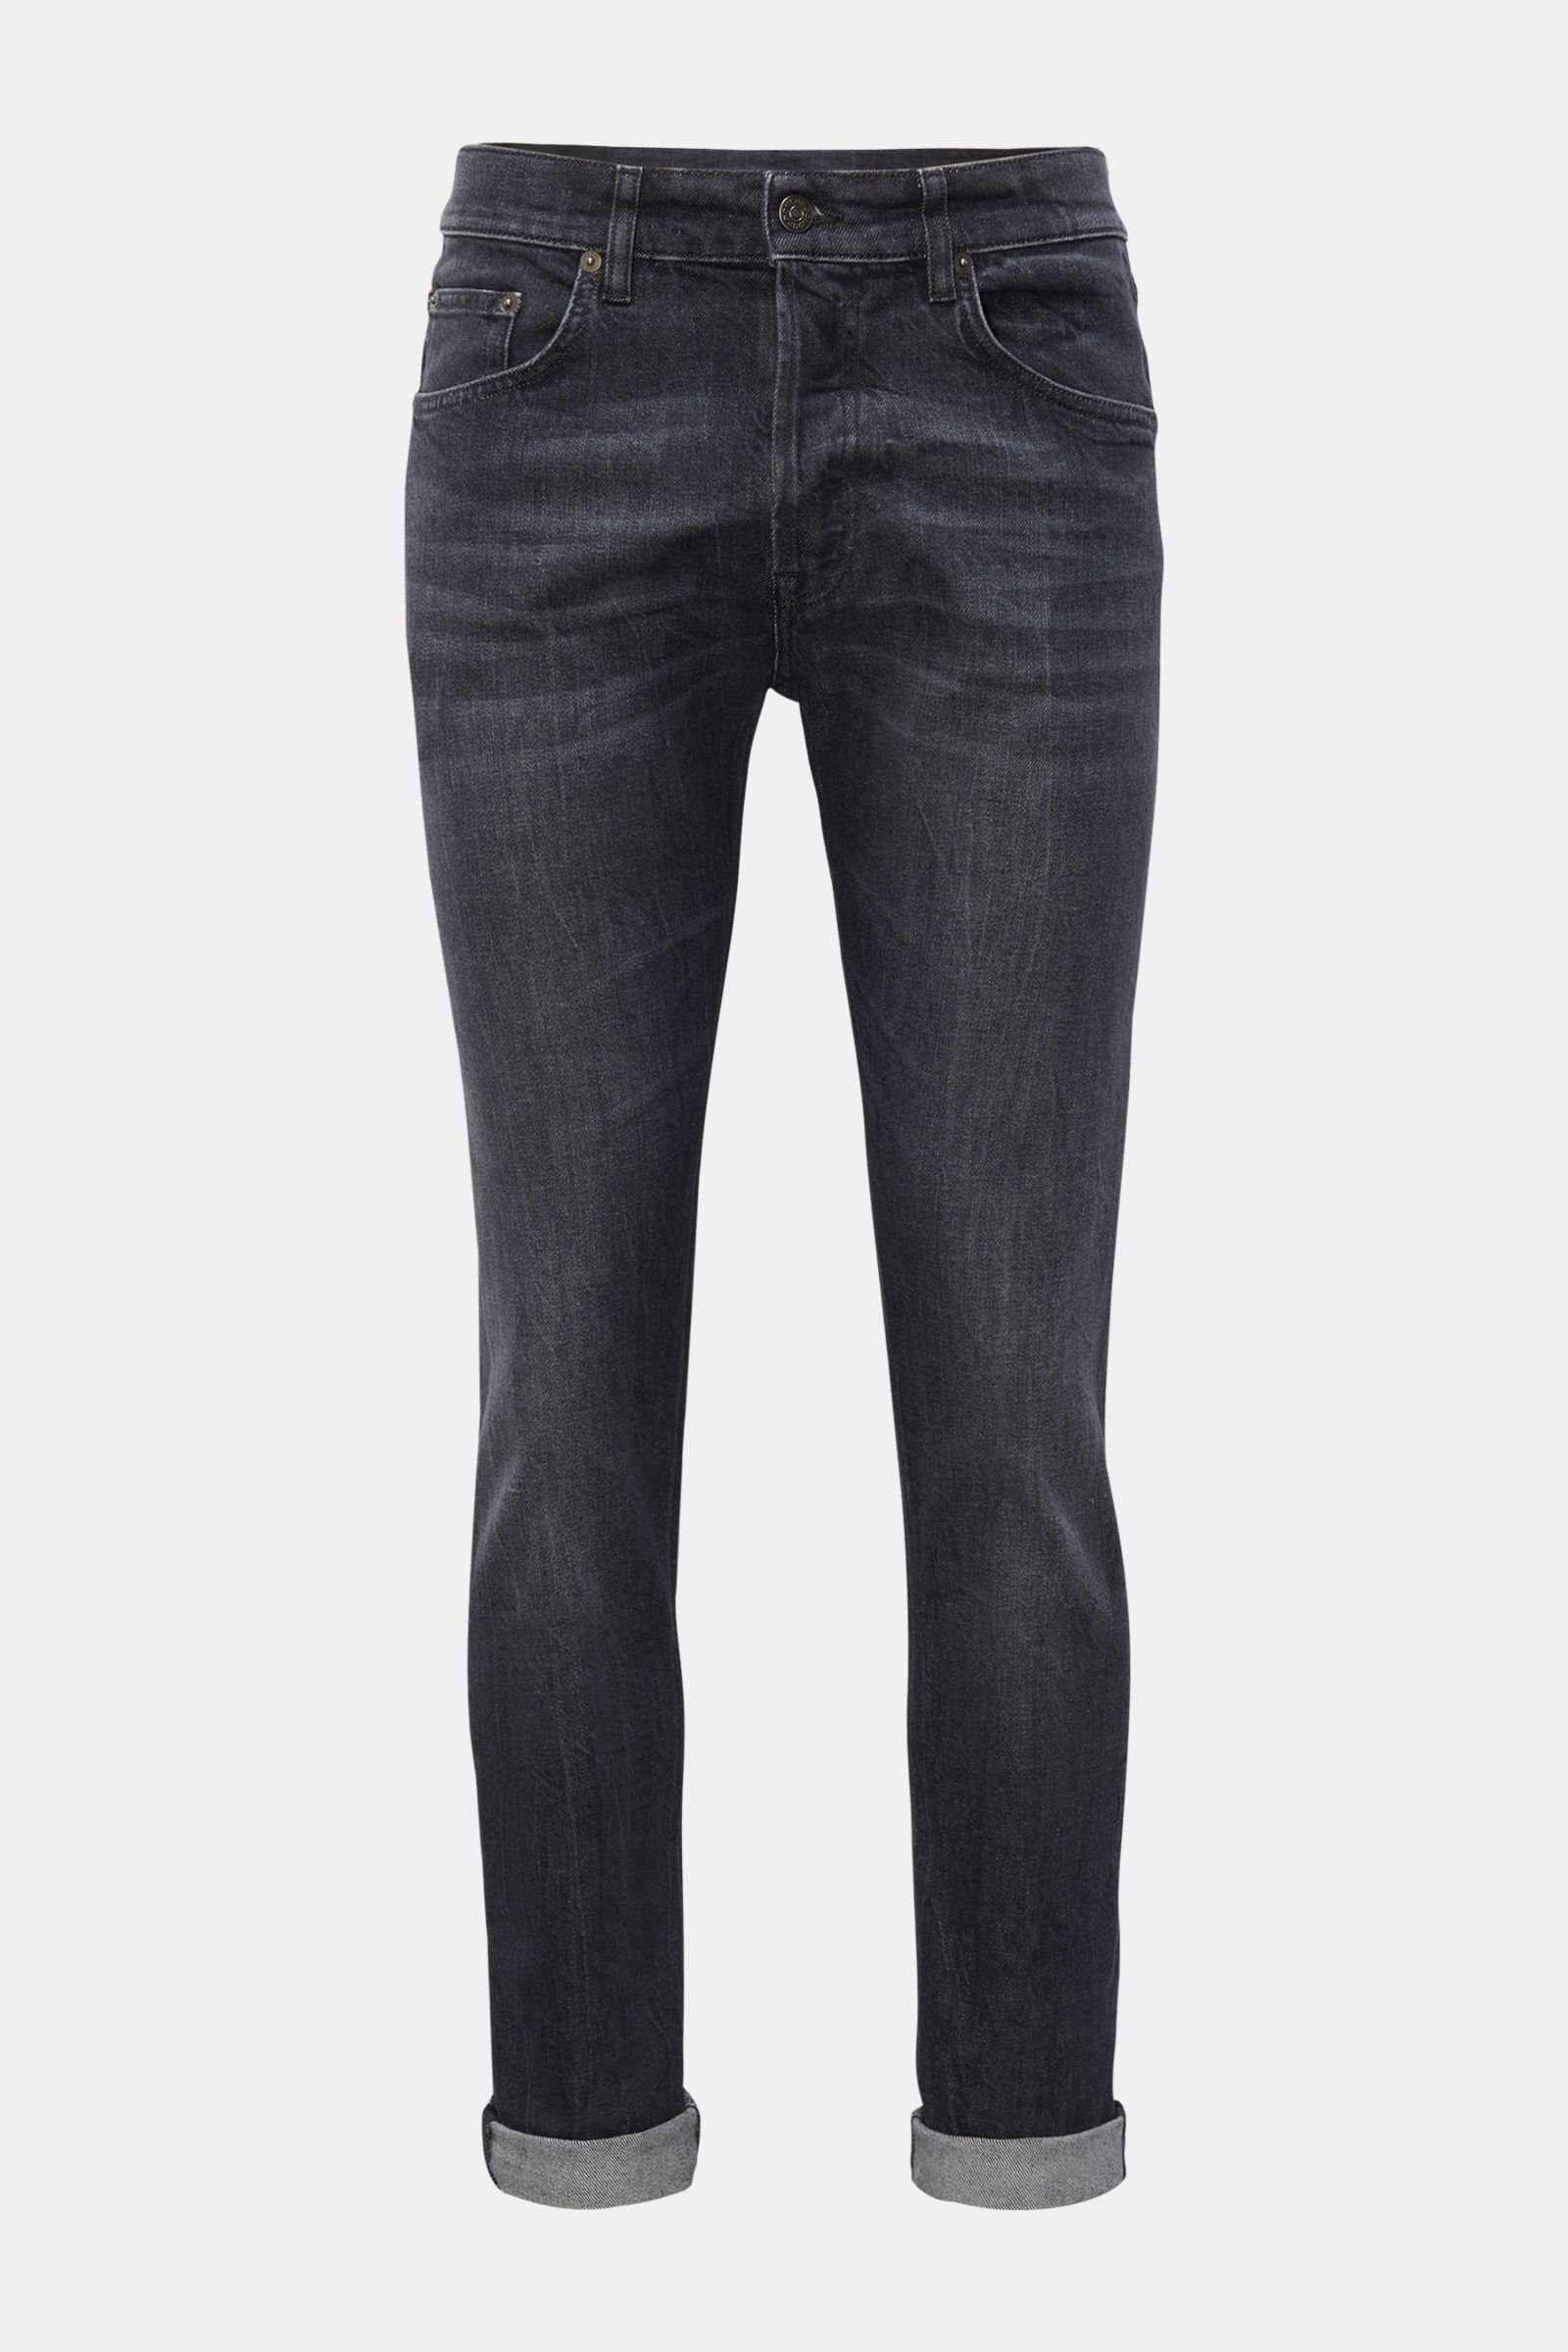 DONDUP jeans 'Icon Regular Fit' dark grey | BRAUN Hamburg